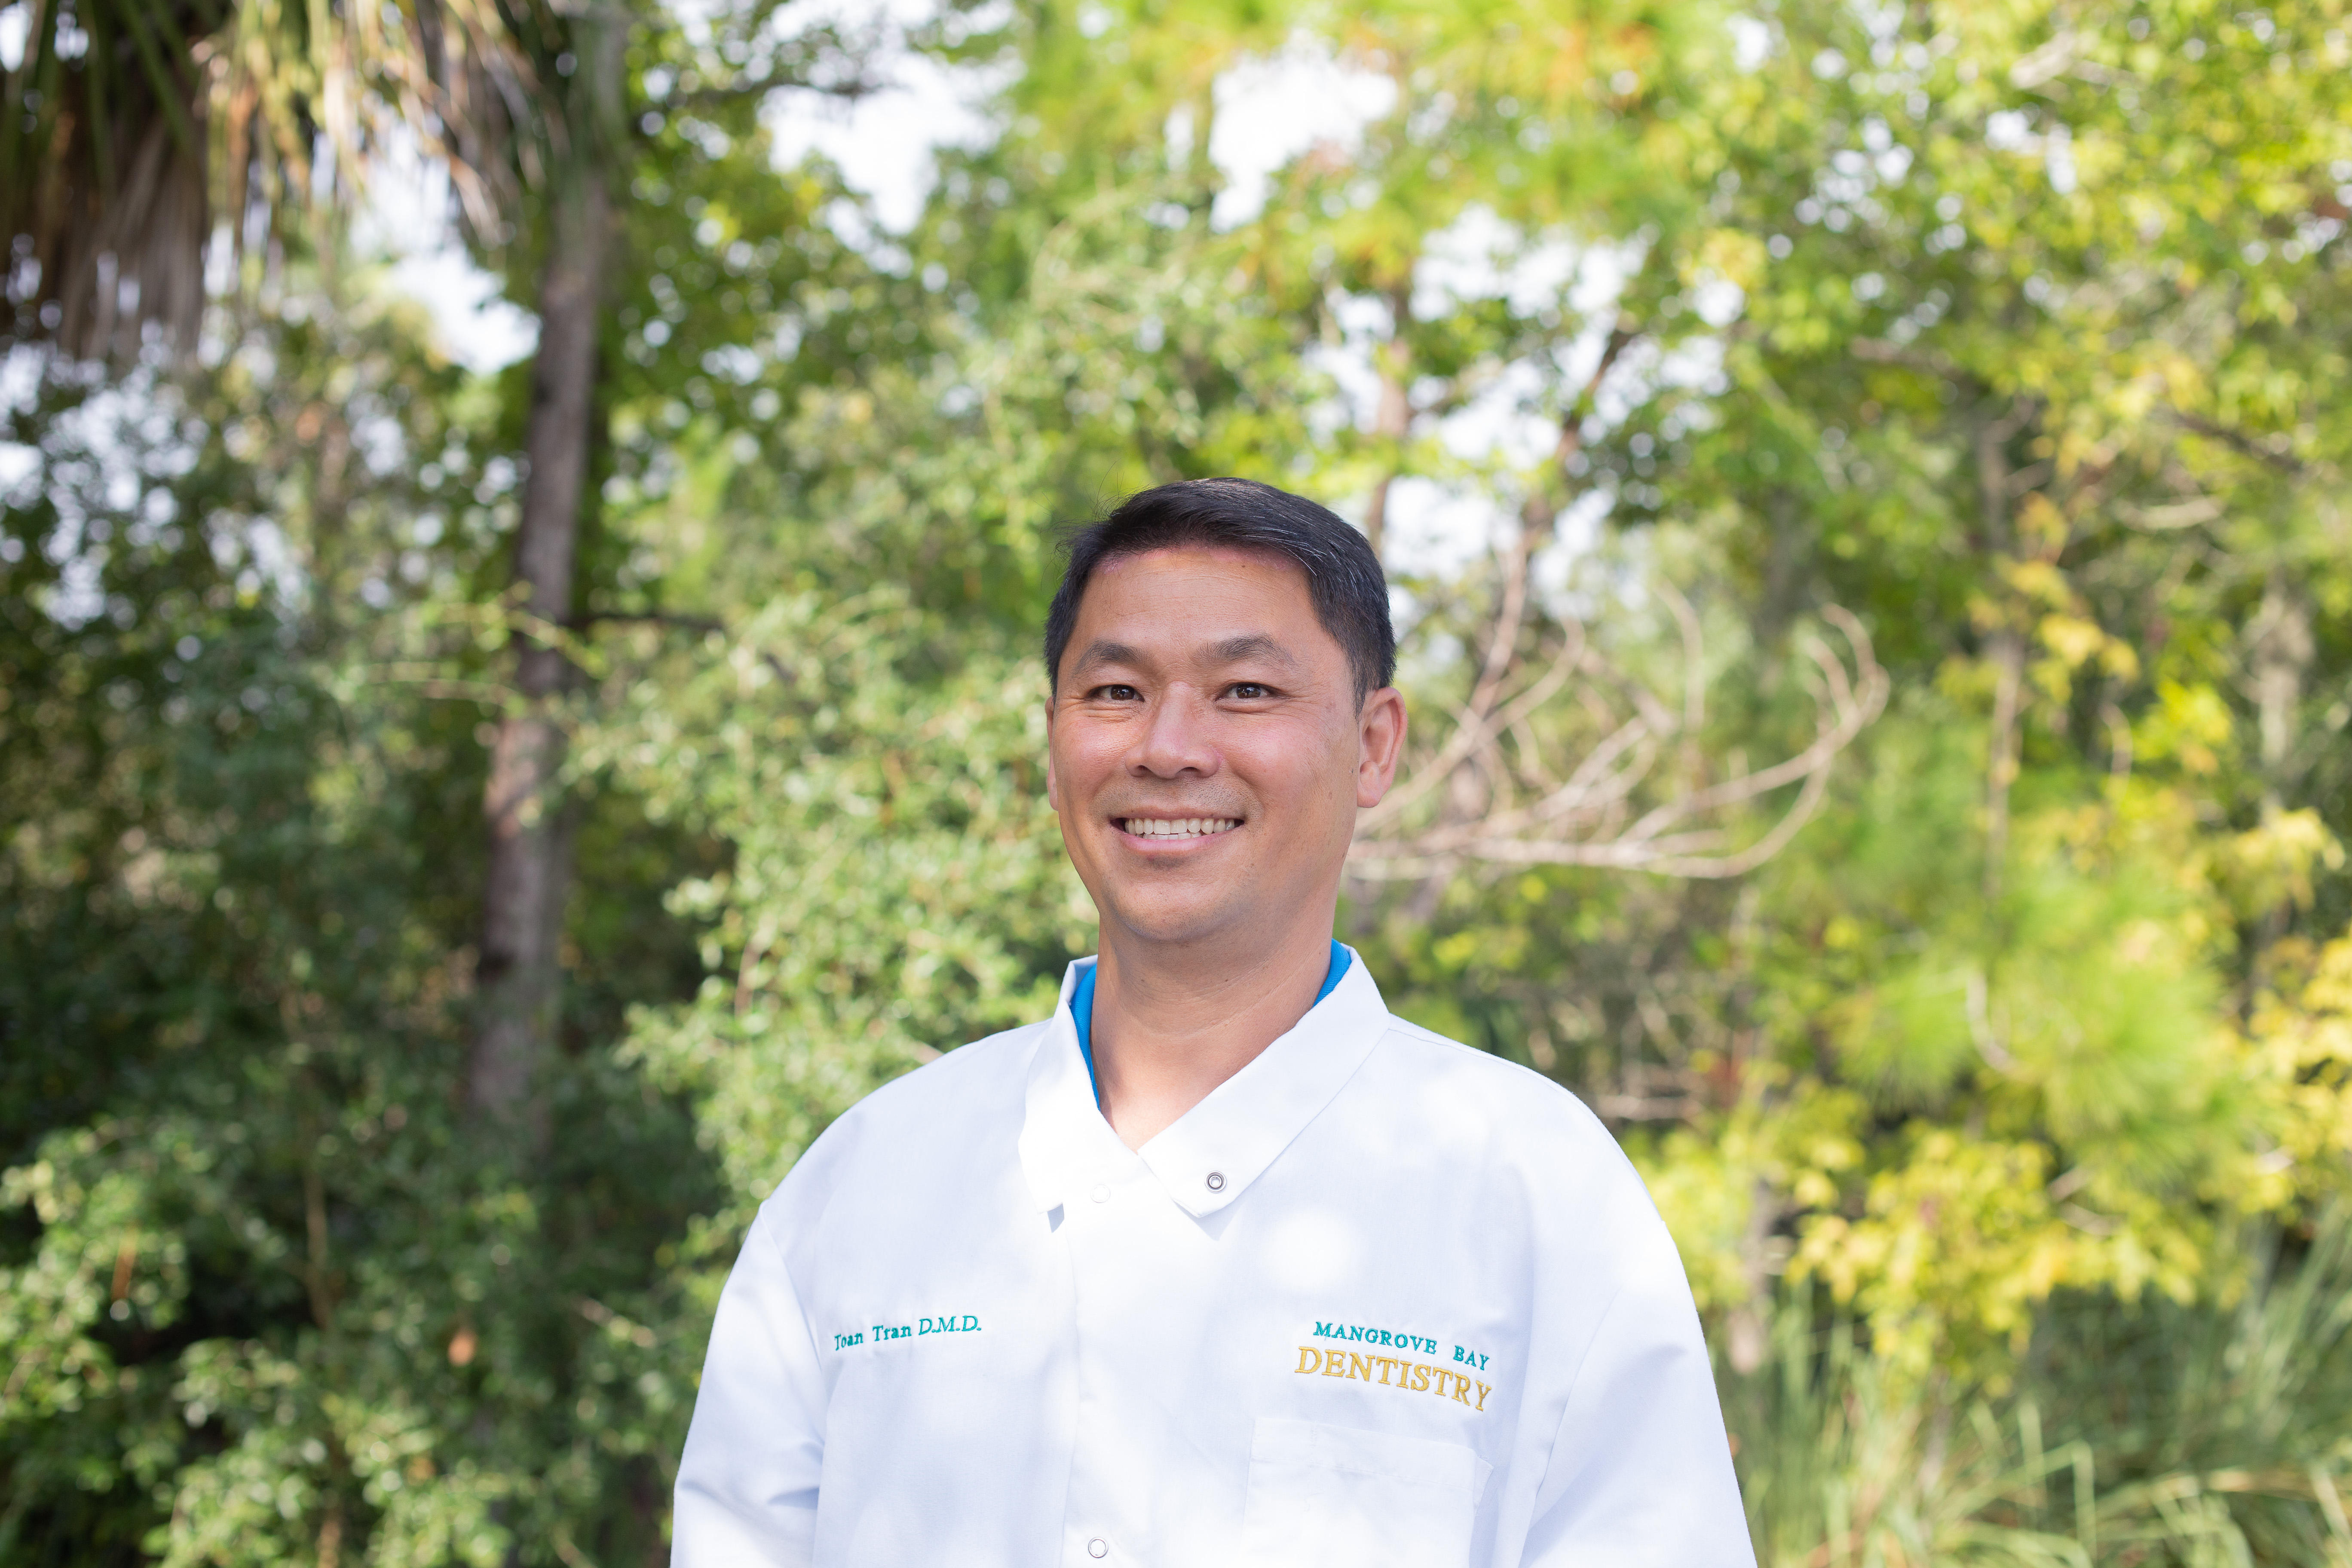 Meet our amazing dentist, Dr. Tran!